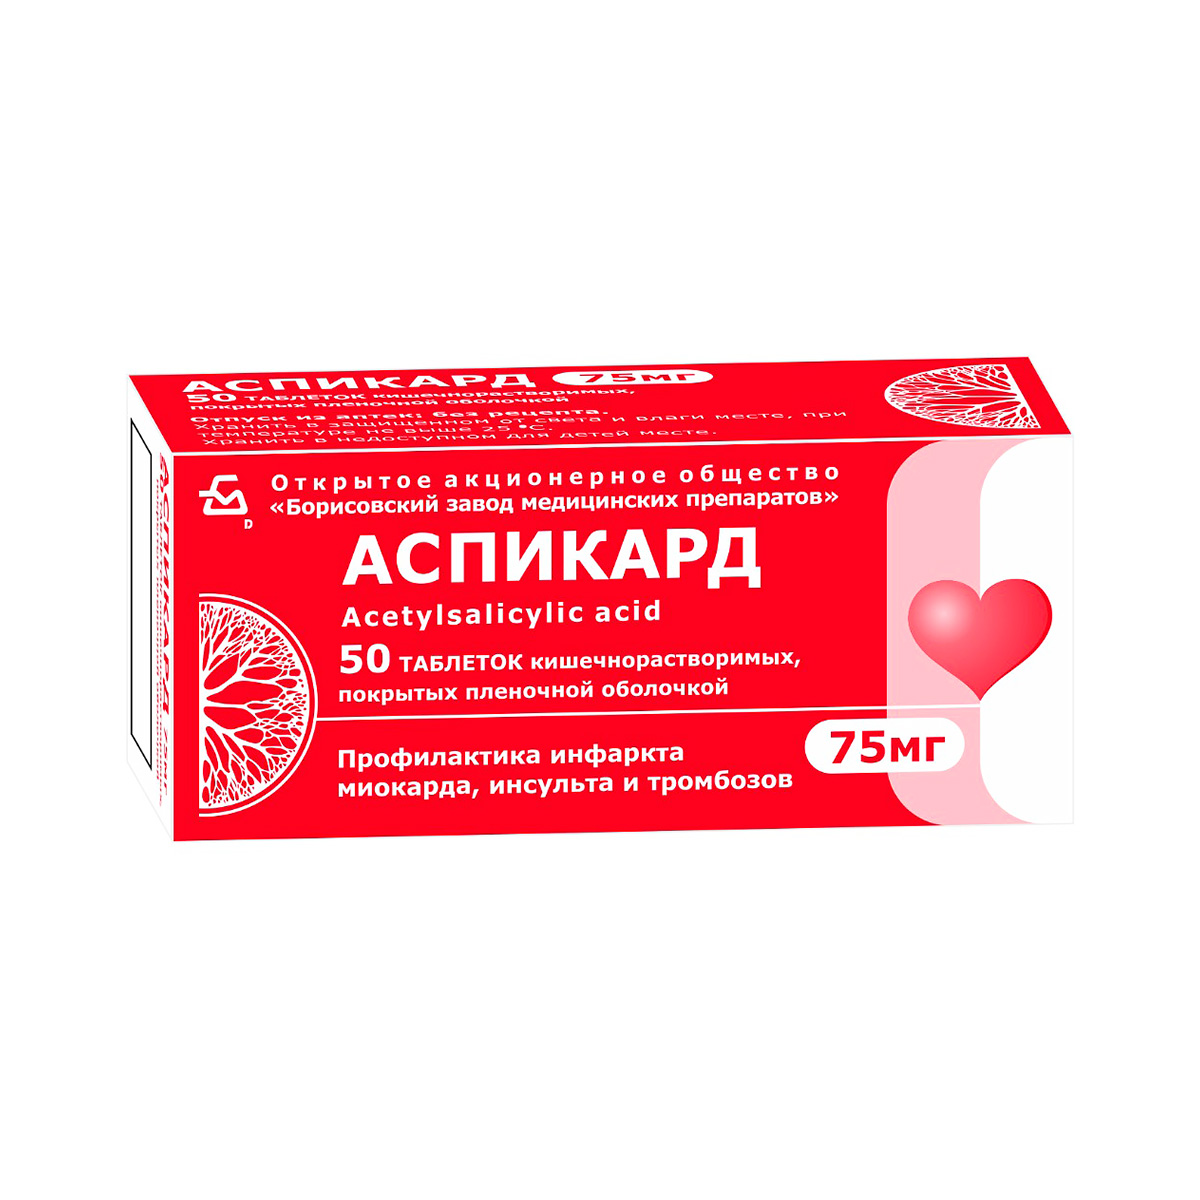 Аспикард 75 мг таблетки кишечнорастворимые 50 шт